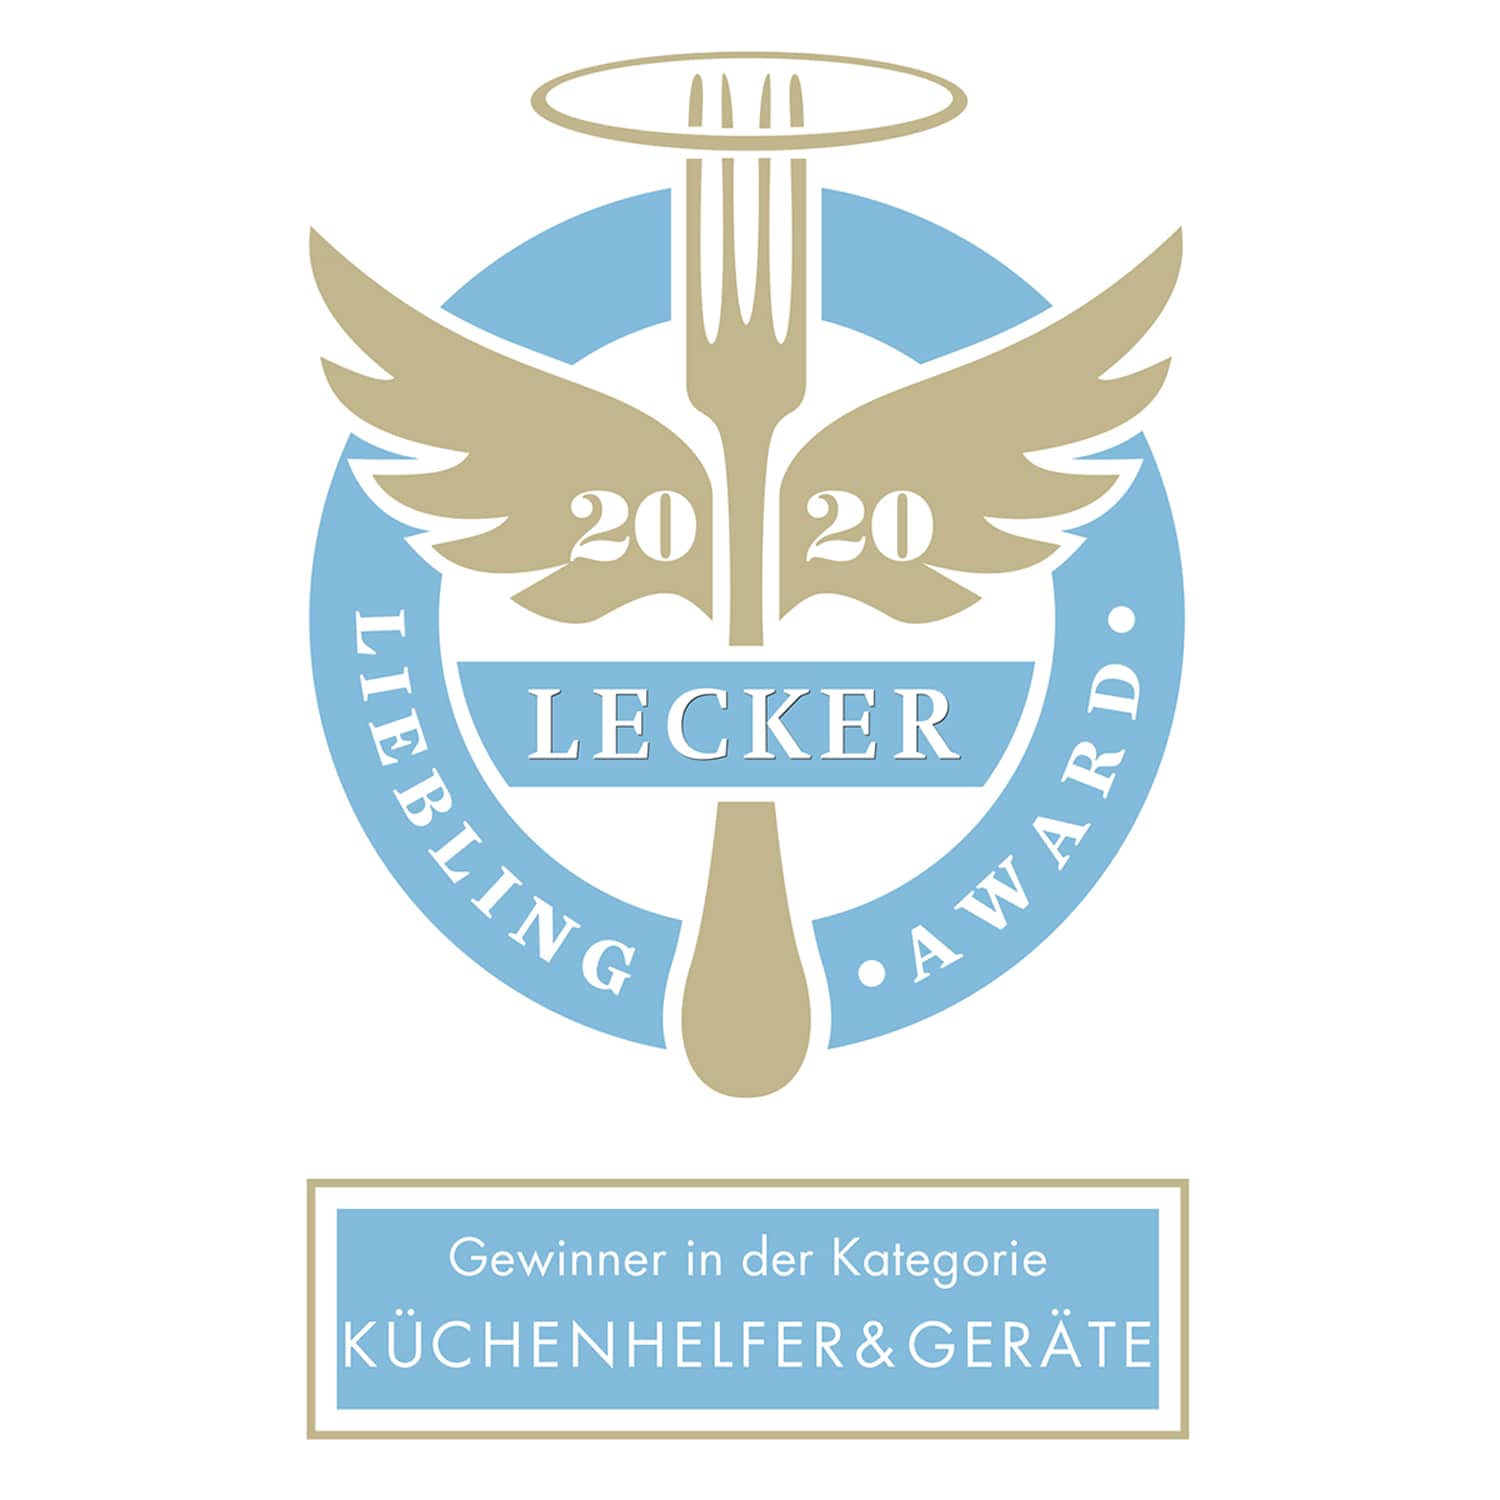 lecker liebling award logo